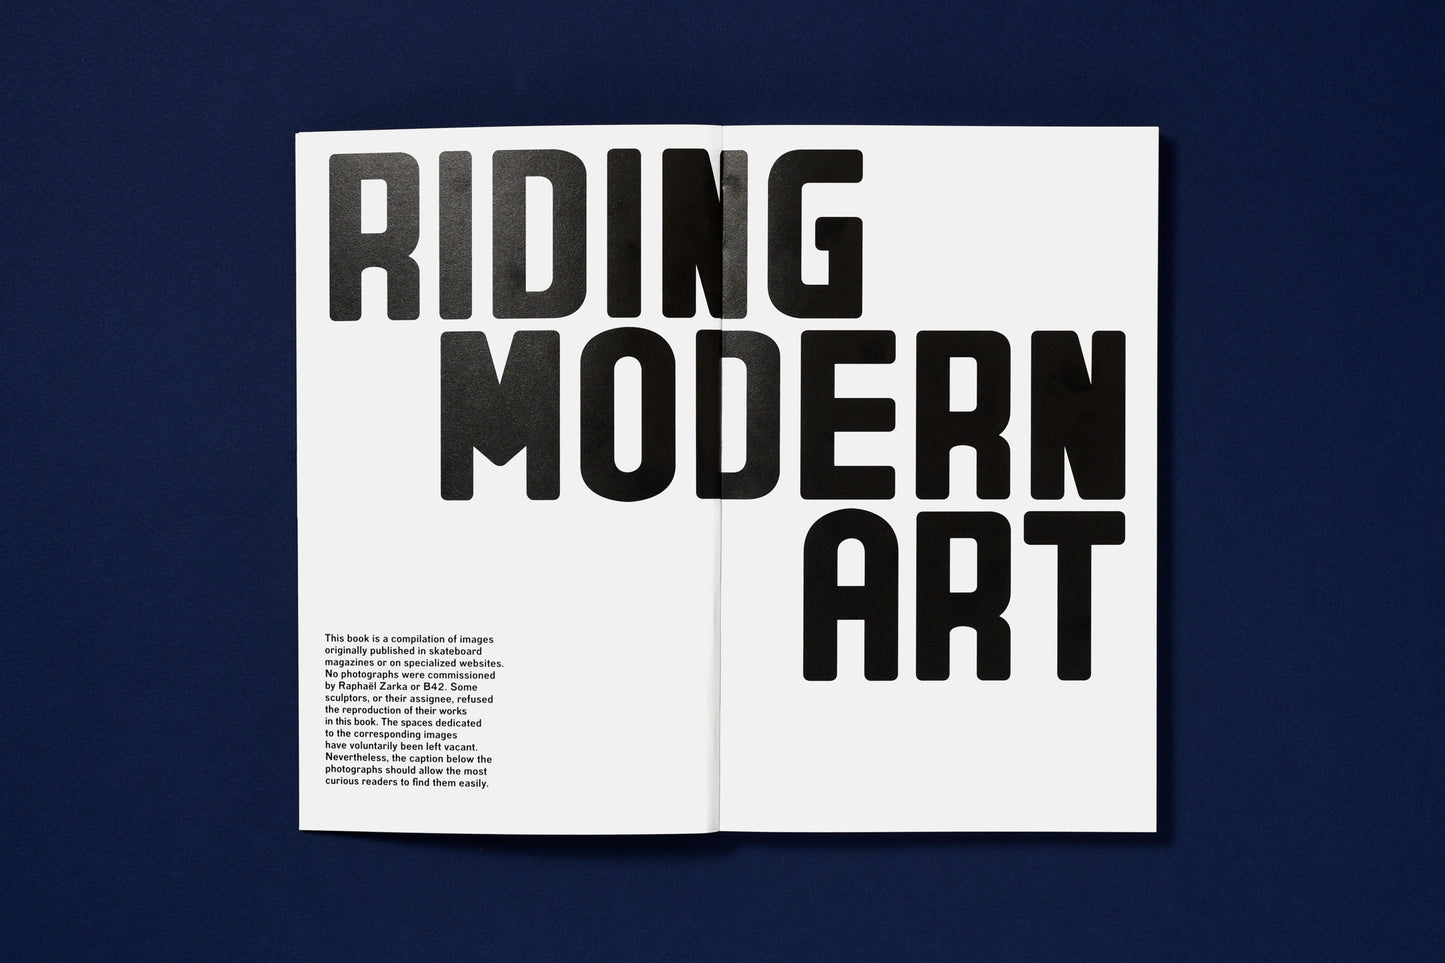 Raphaël Zarka - Riding Modern Art